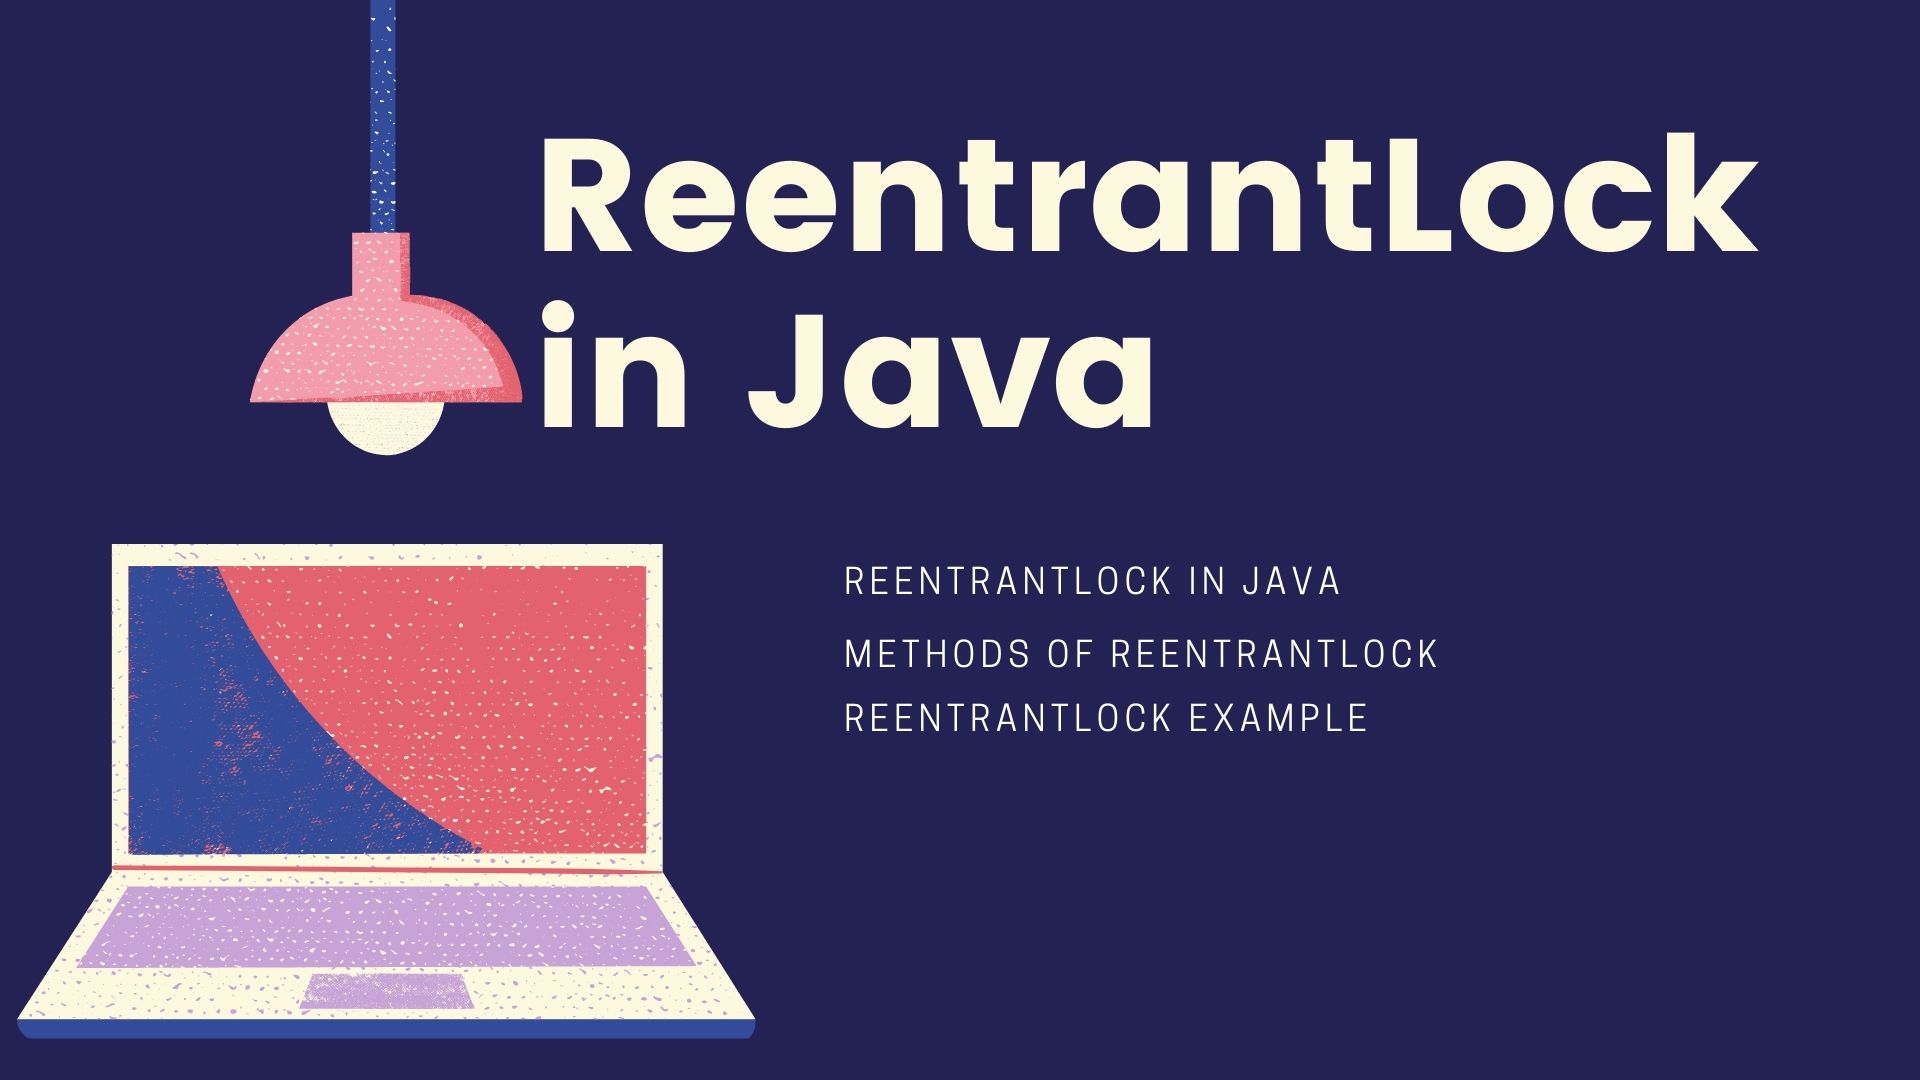 ReentrantLock in Java